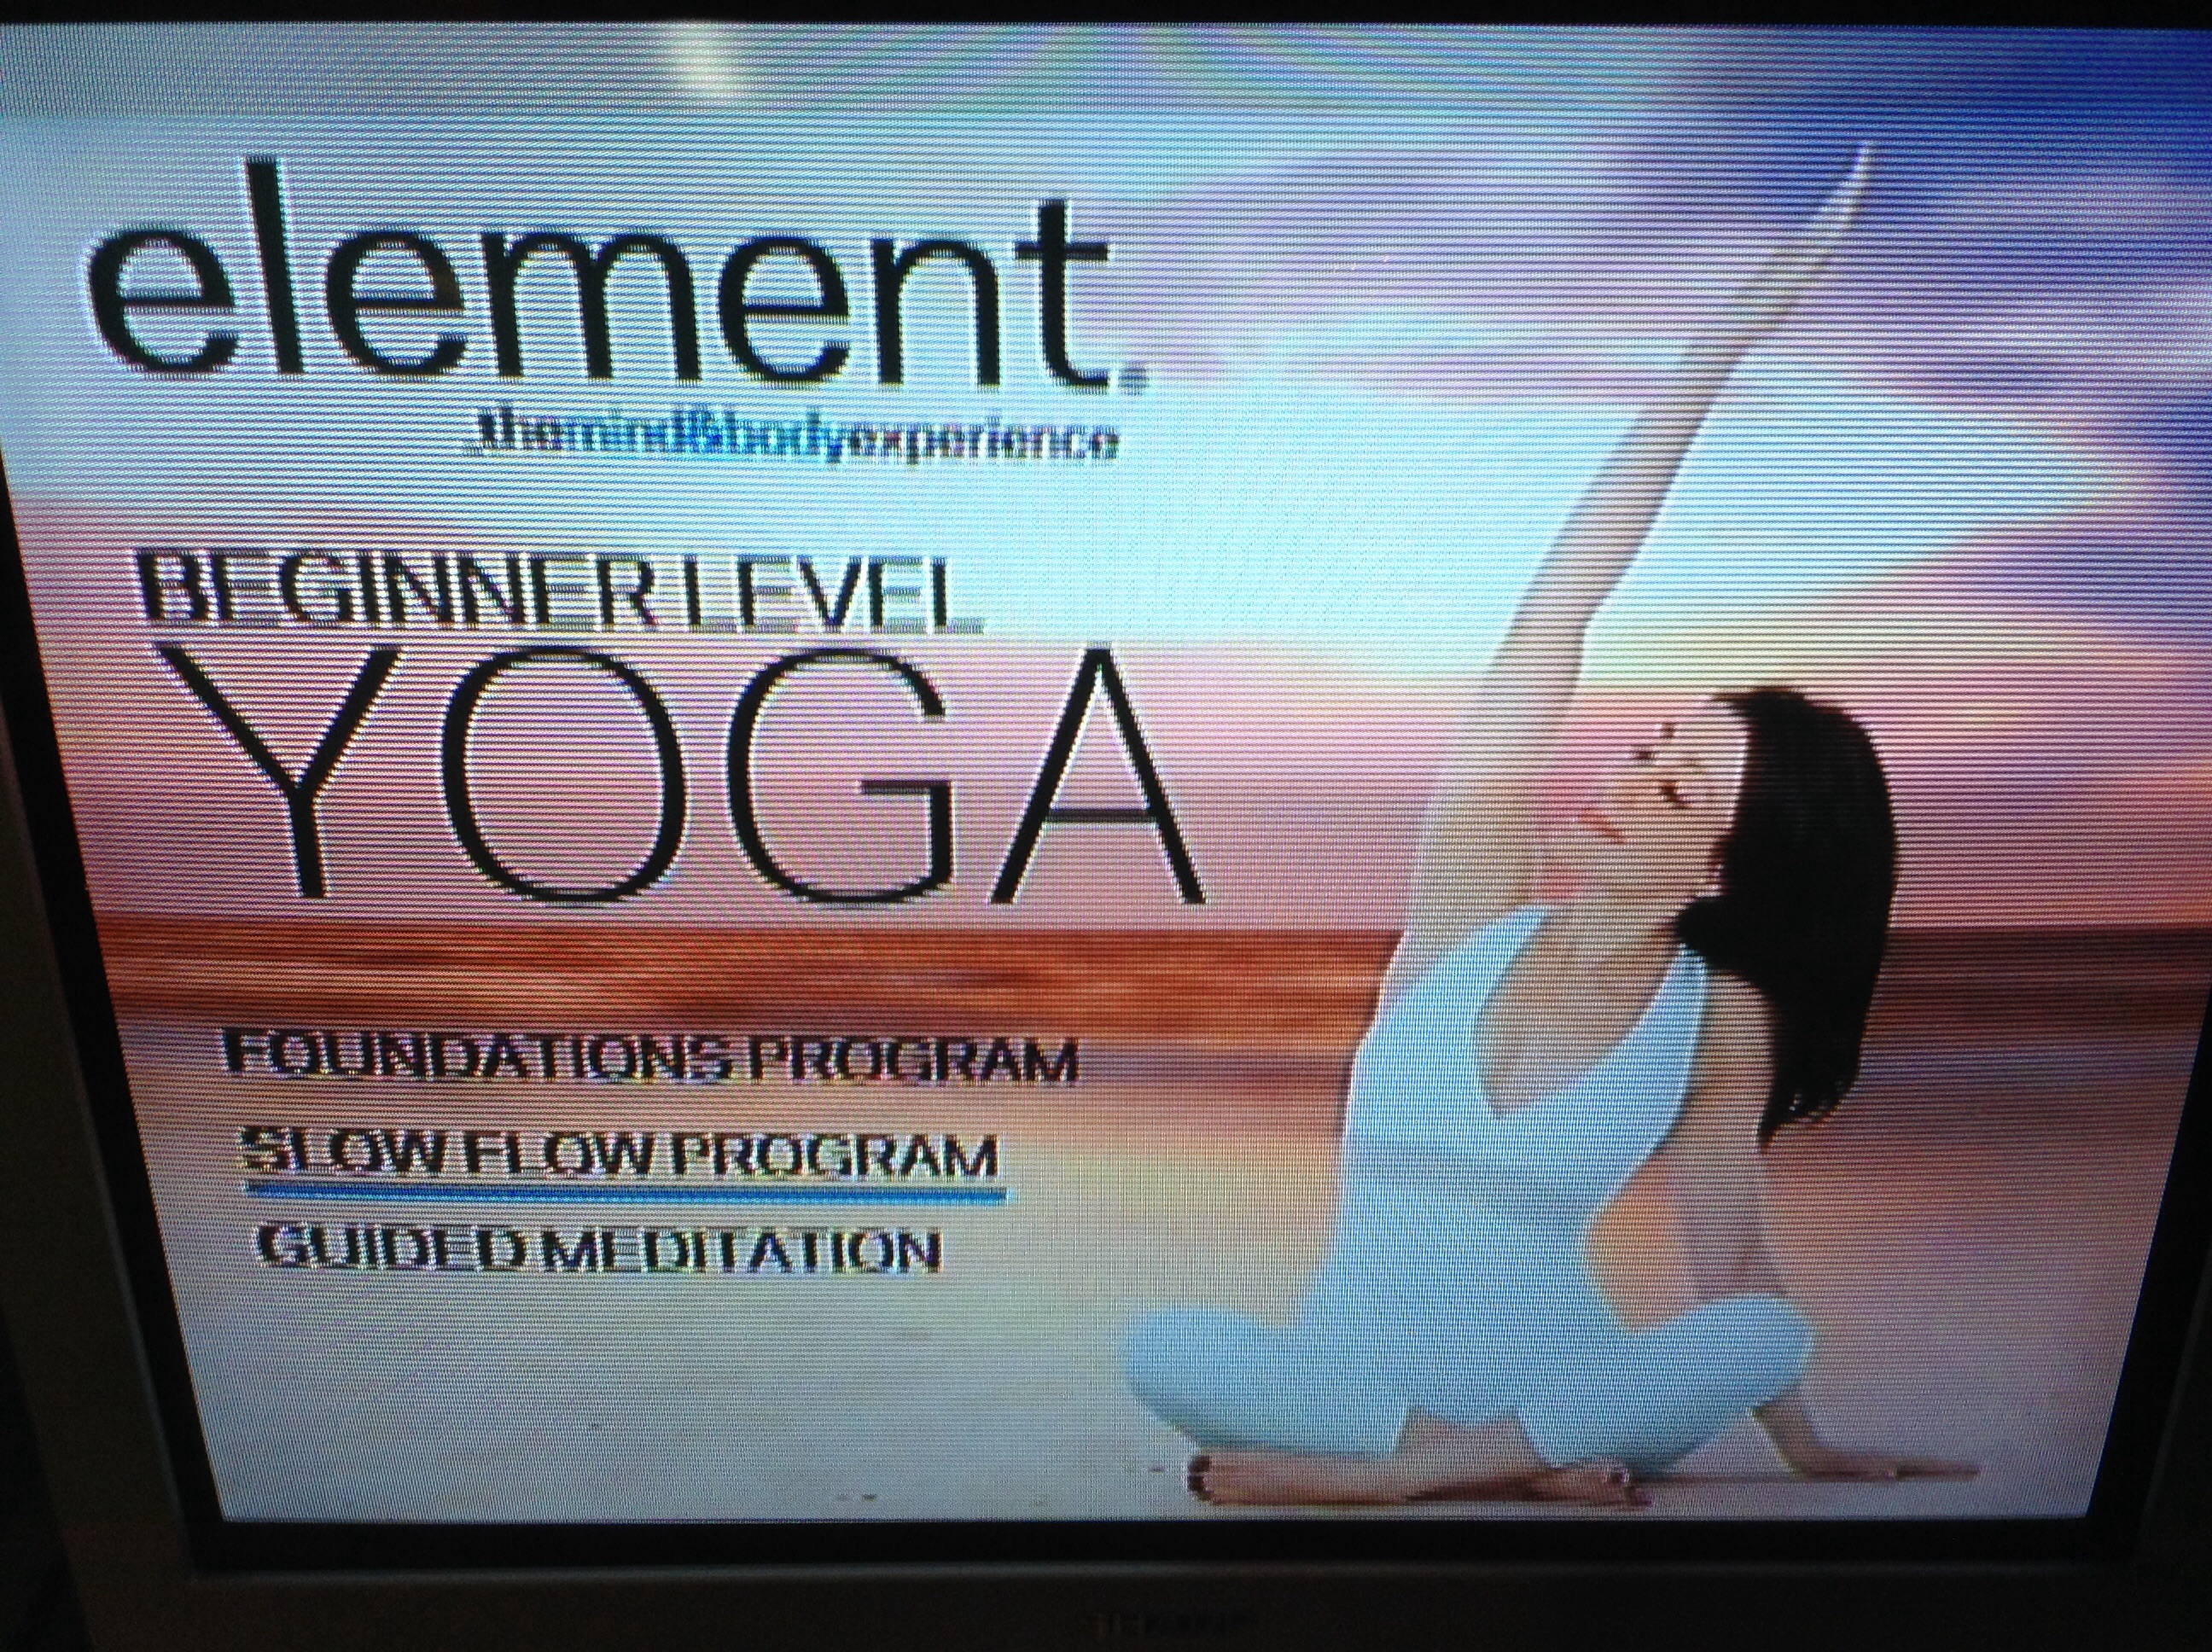 Element: Hatha & Flow Yoga for Beginners (DVD)